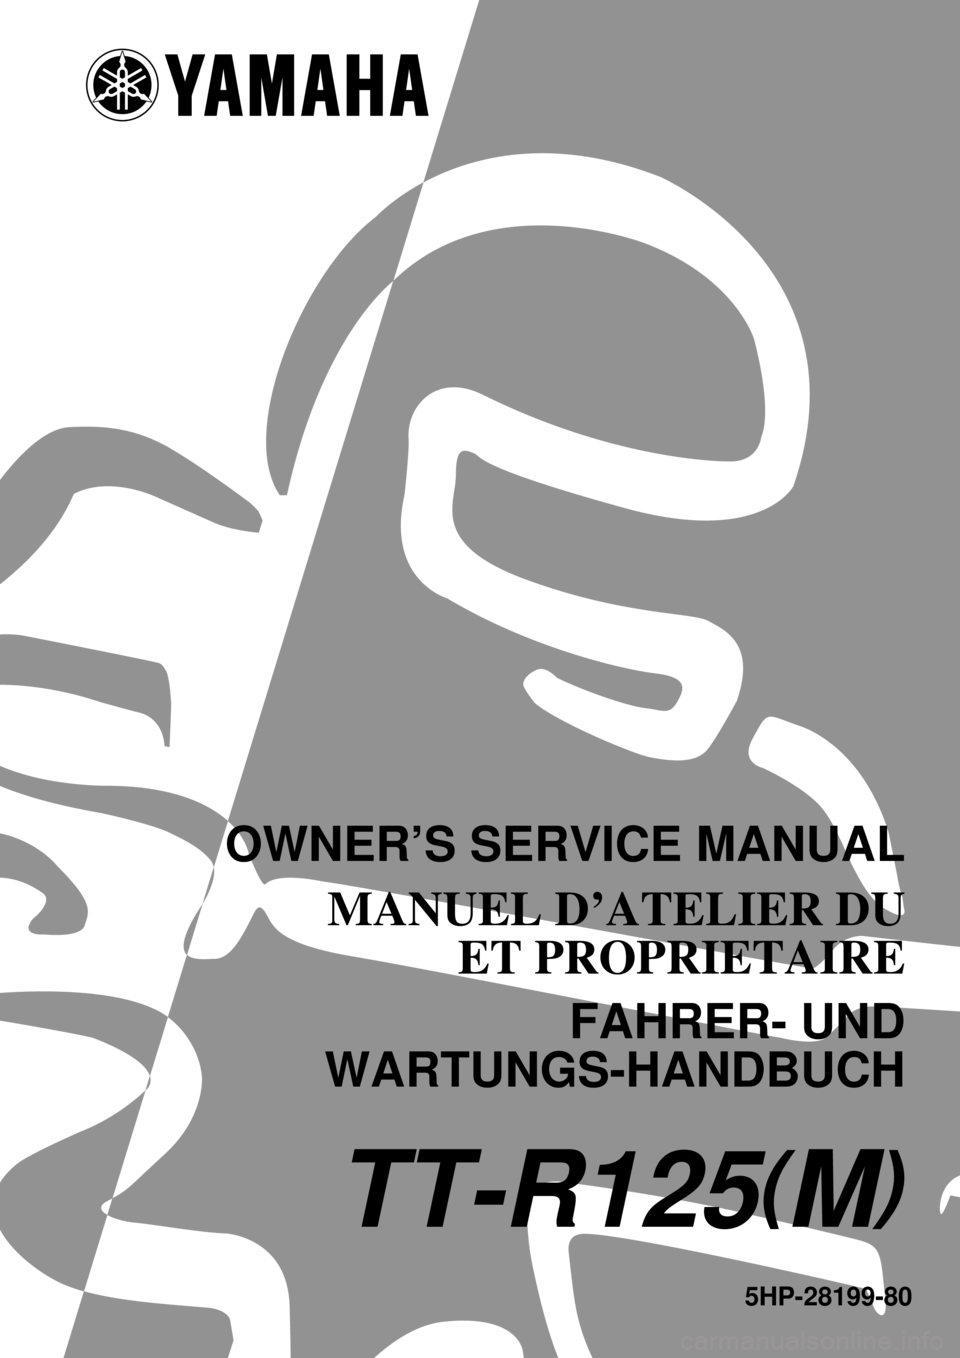 YAMAHA TTR125 2000  Betriebsanleitungen (in German) 5HP-28199-80
TT-R125(M)
OWNER’S SERVICE MANUAL
MANUEL D’ATELIER DU
ET PROPRIETAIRE
FAHRER- UND
WARTUNGS-HANDBUCH 